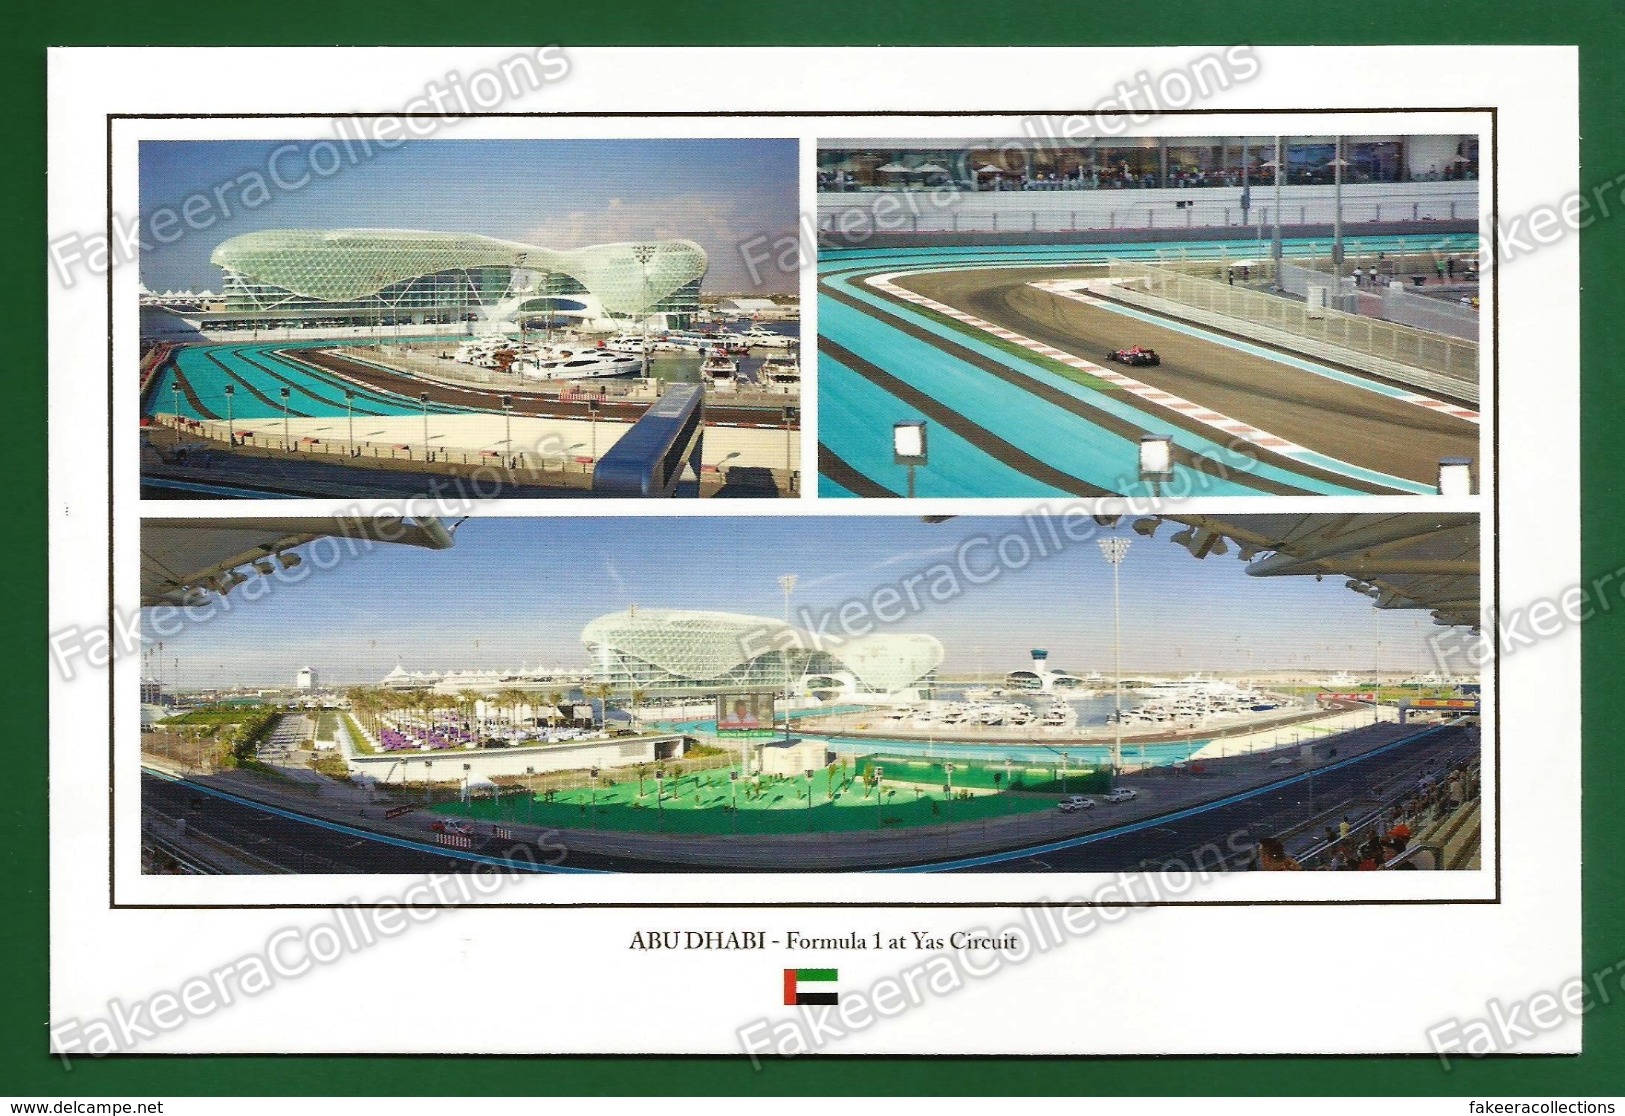 UNITED ARAB EMIRATES / UAE - ABU DHABI Formula 1 At Yas Circuit - Postcard # 43 - Unused As Scan - Emirats Arabes Unis